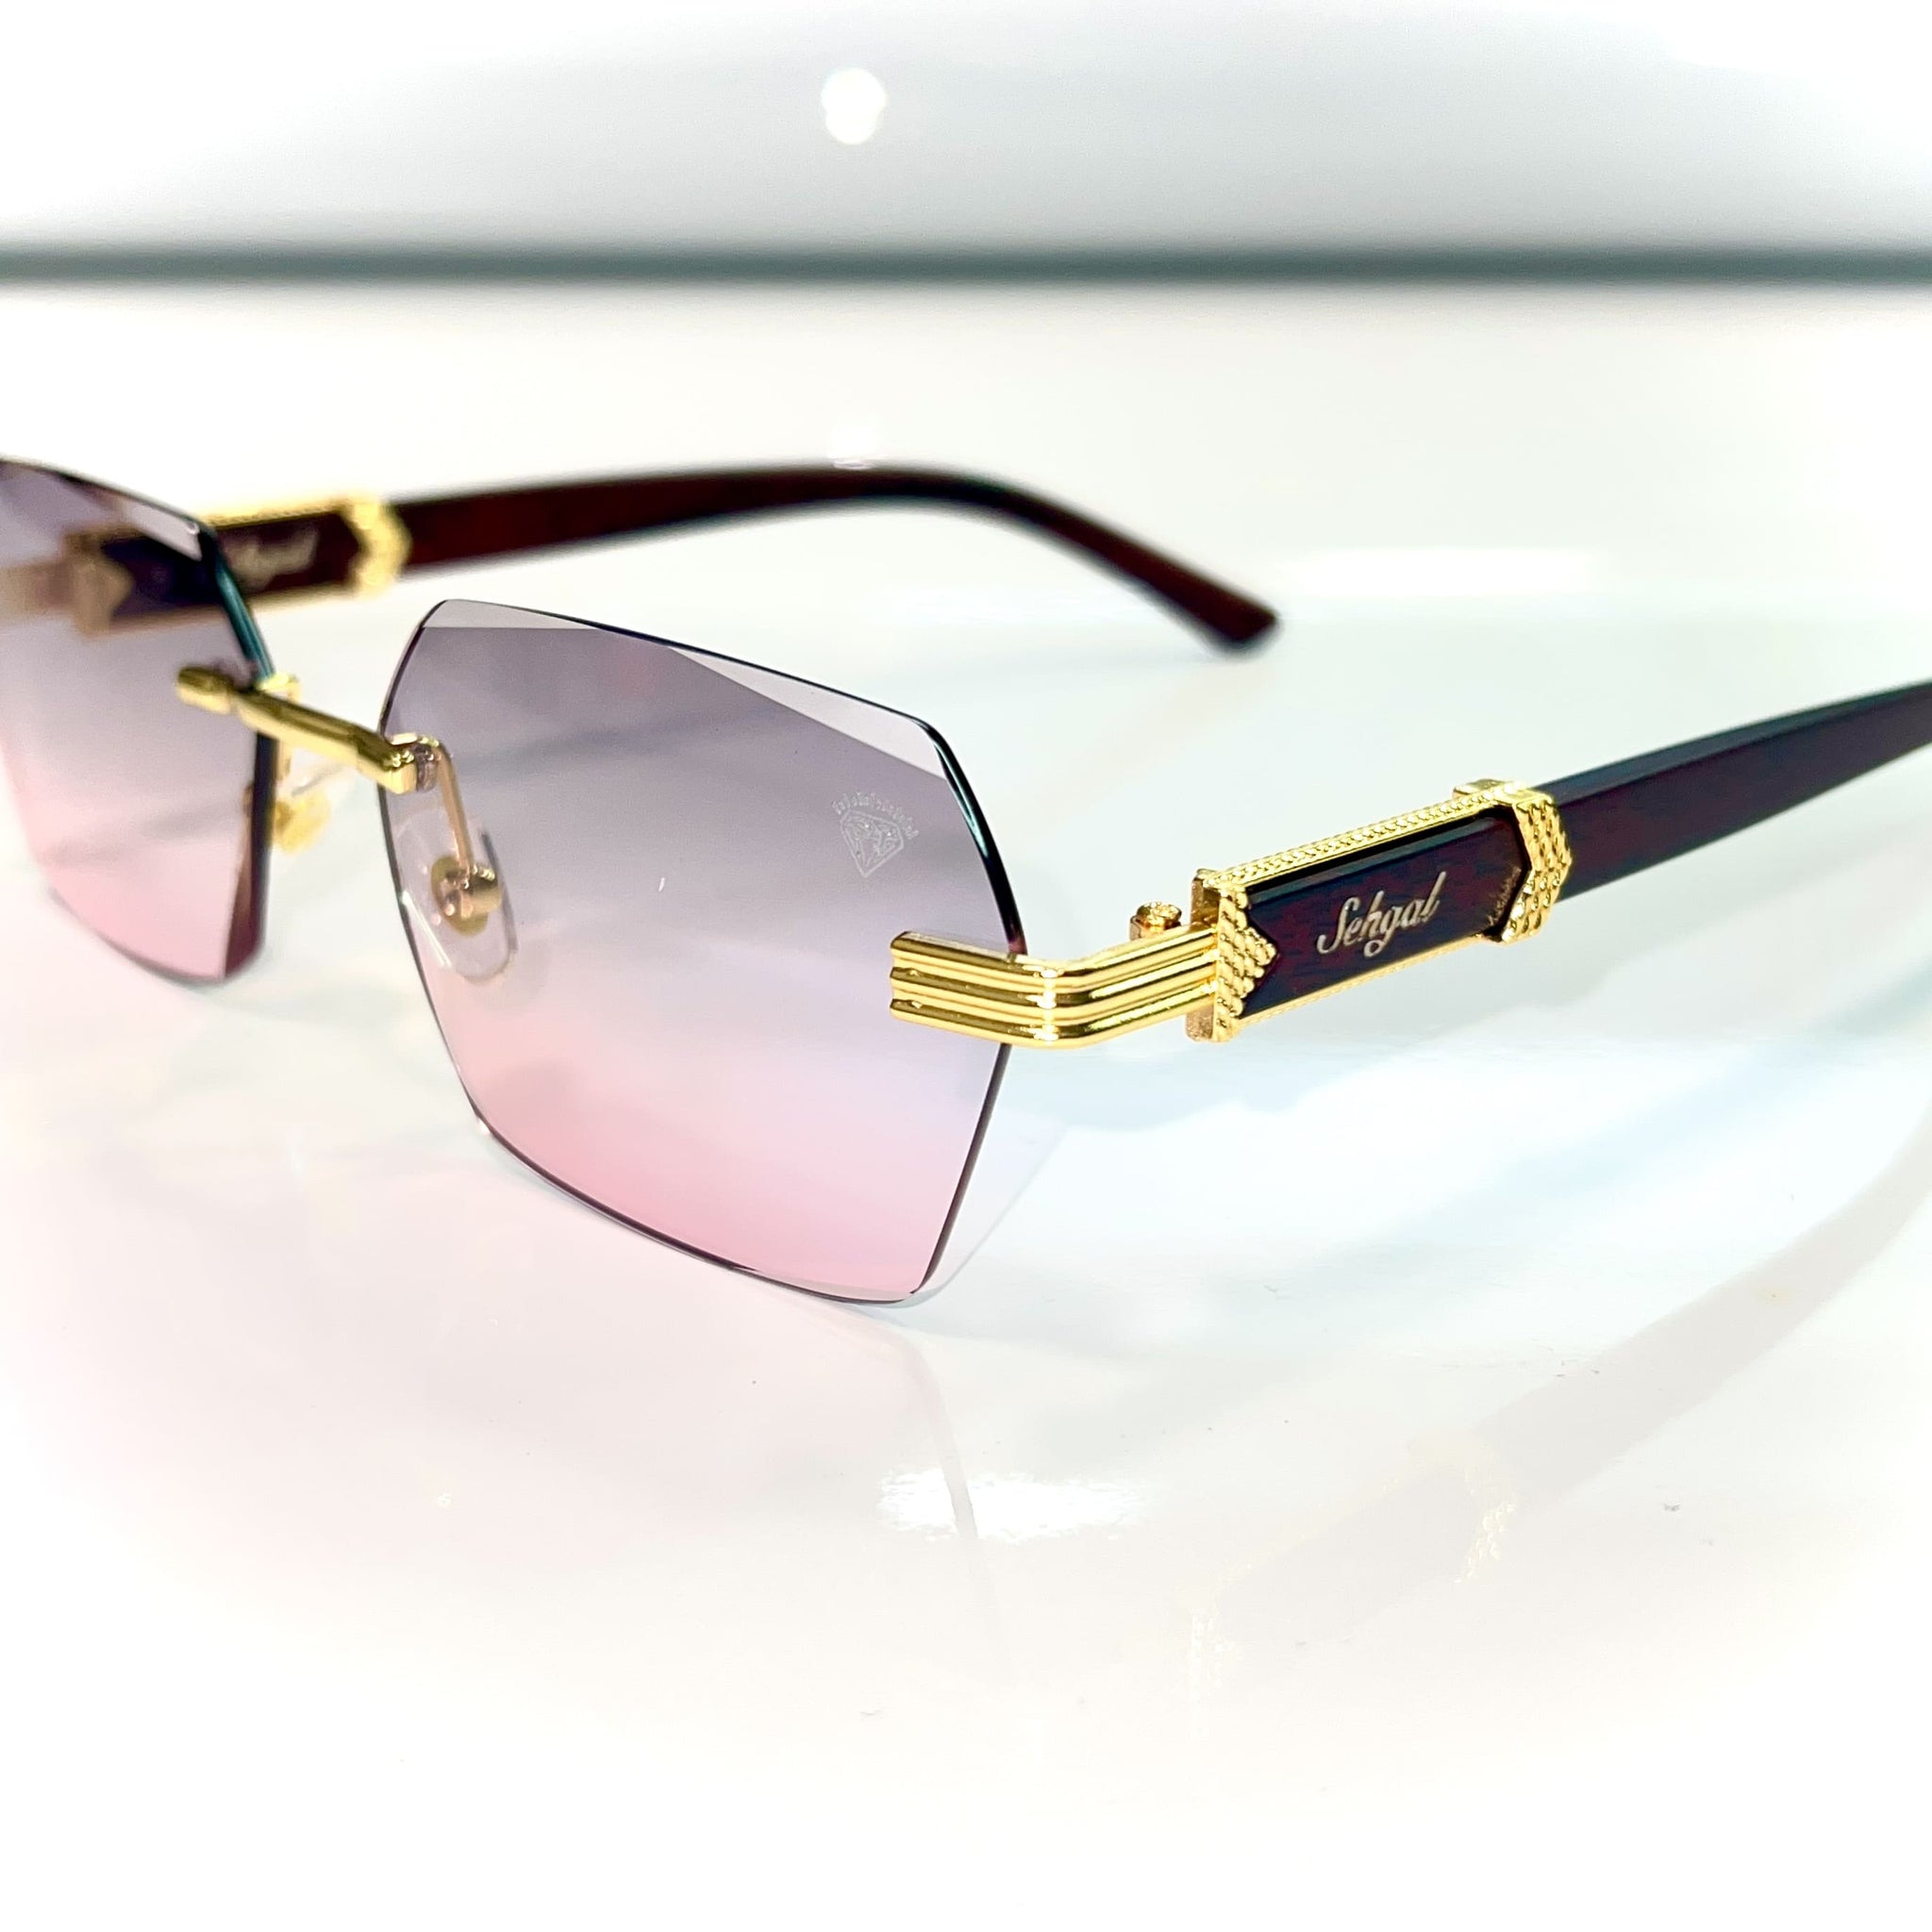 Sehgal Woodcut glasses - 14k gold plated - Pink shade - Gold / Woodgrain Frame